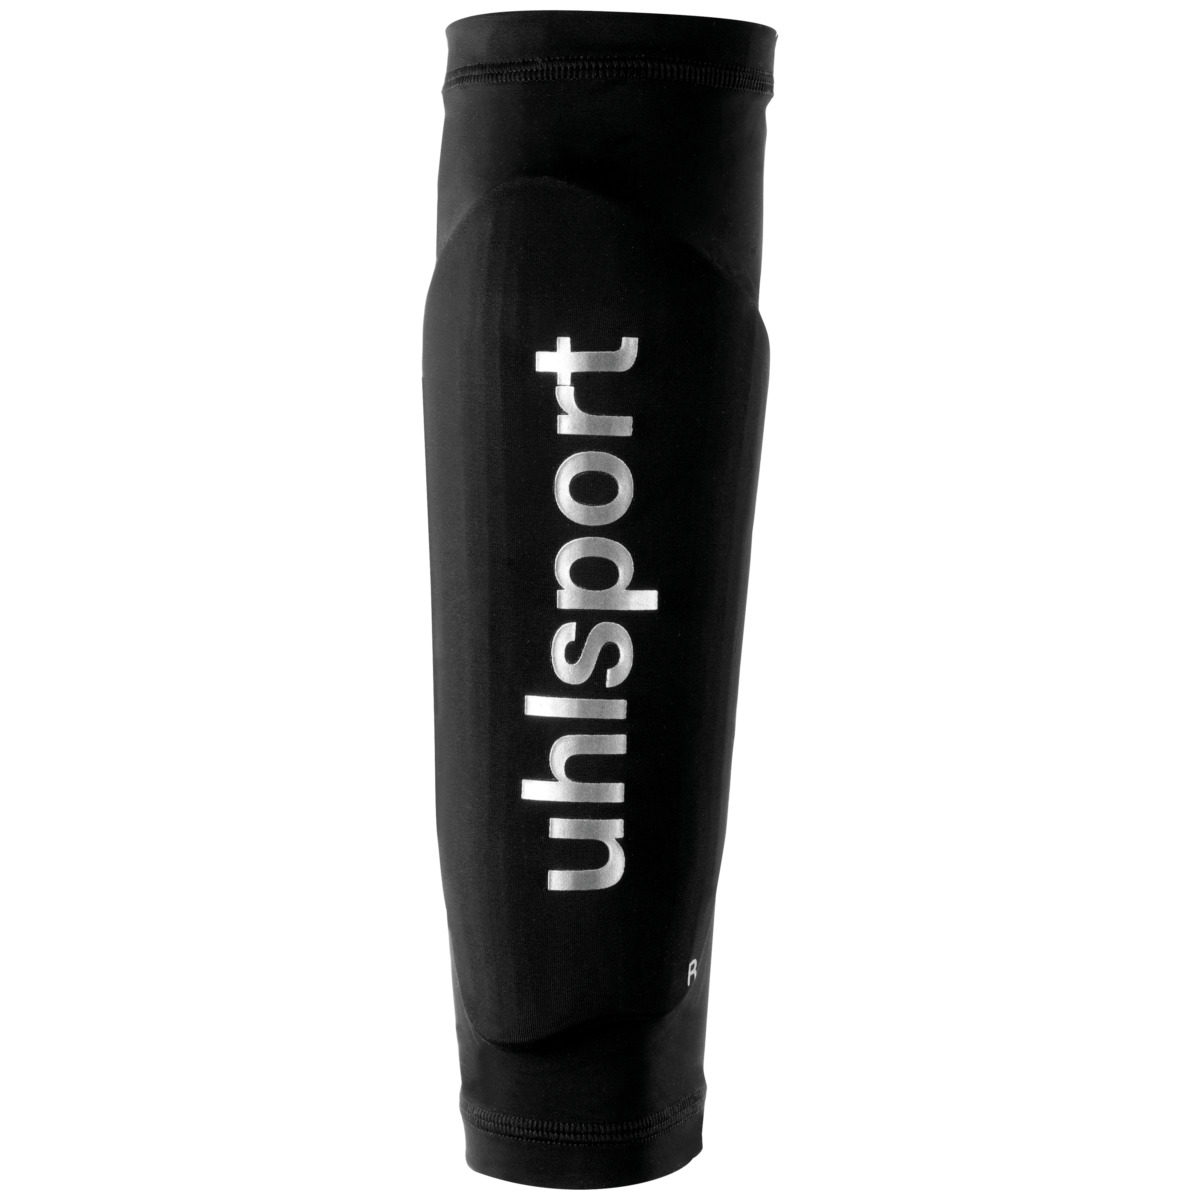 Uhlsport TIBIA SUPPORT Shinguard Shin Pad Sleeves Sleeve $12 BLACK size Junior 